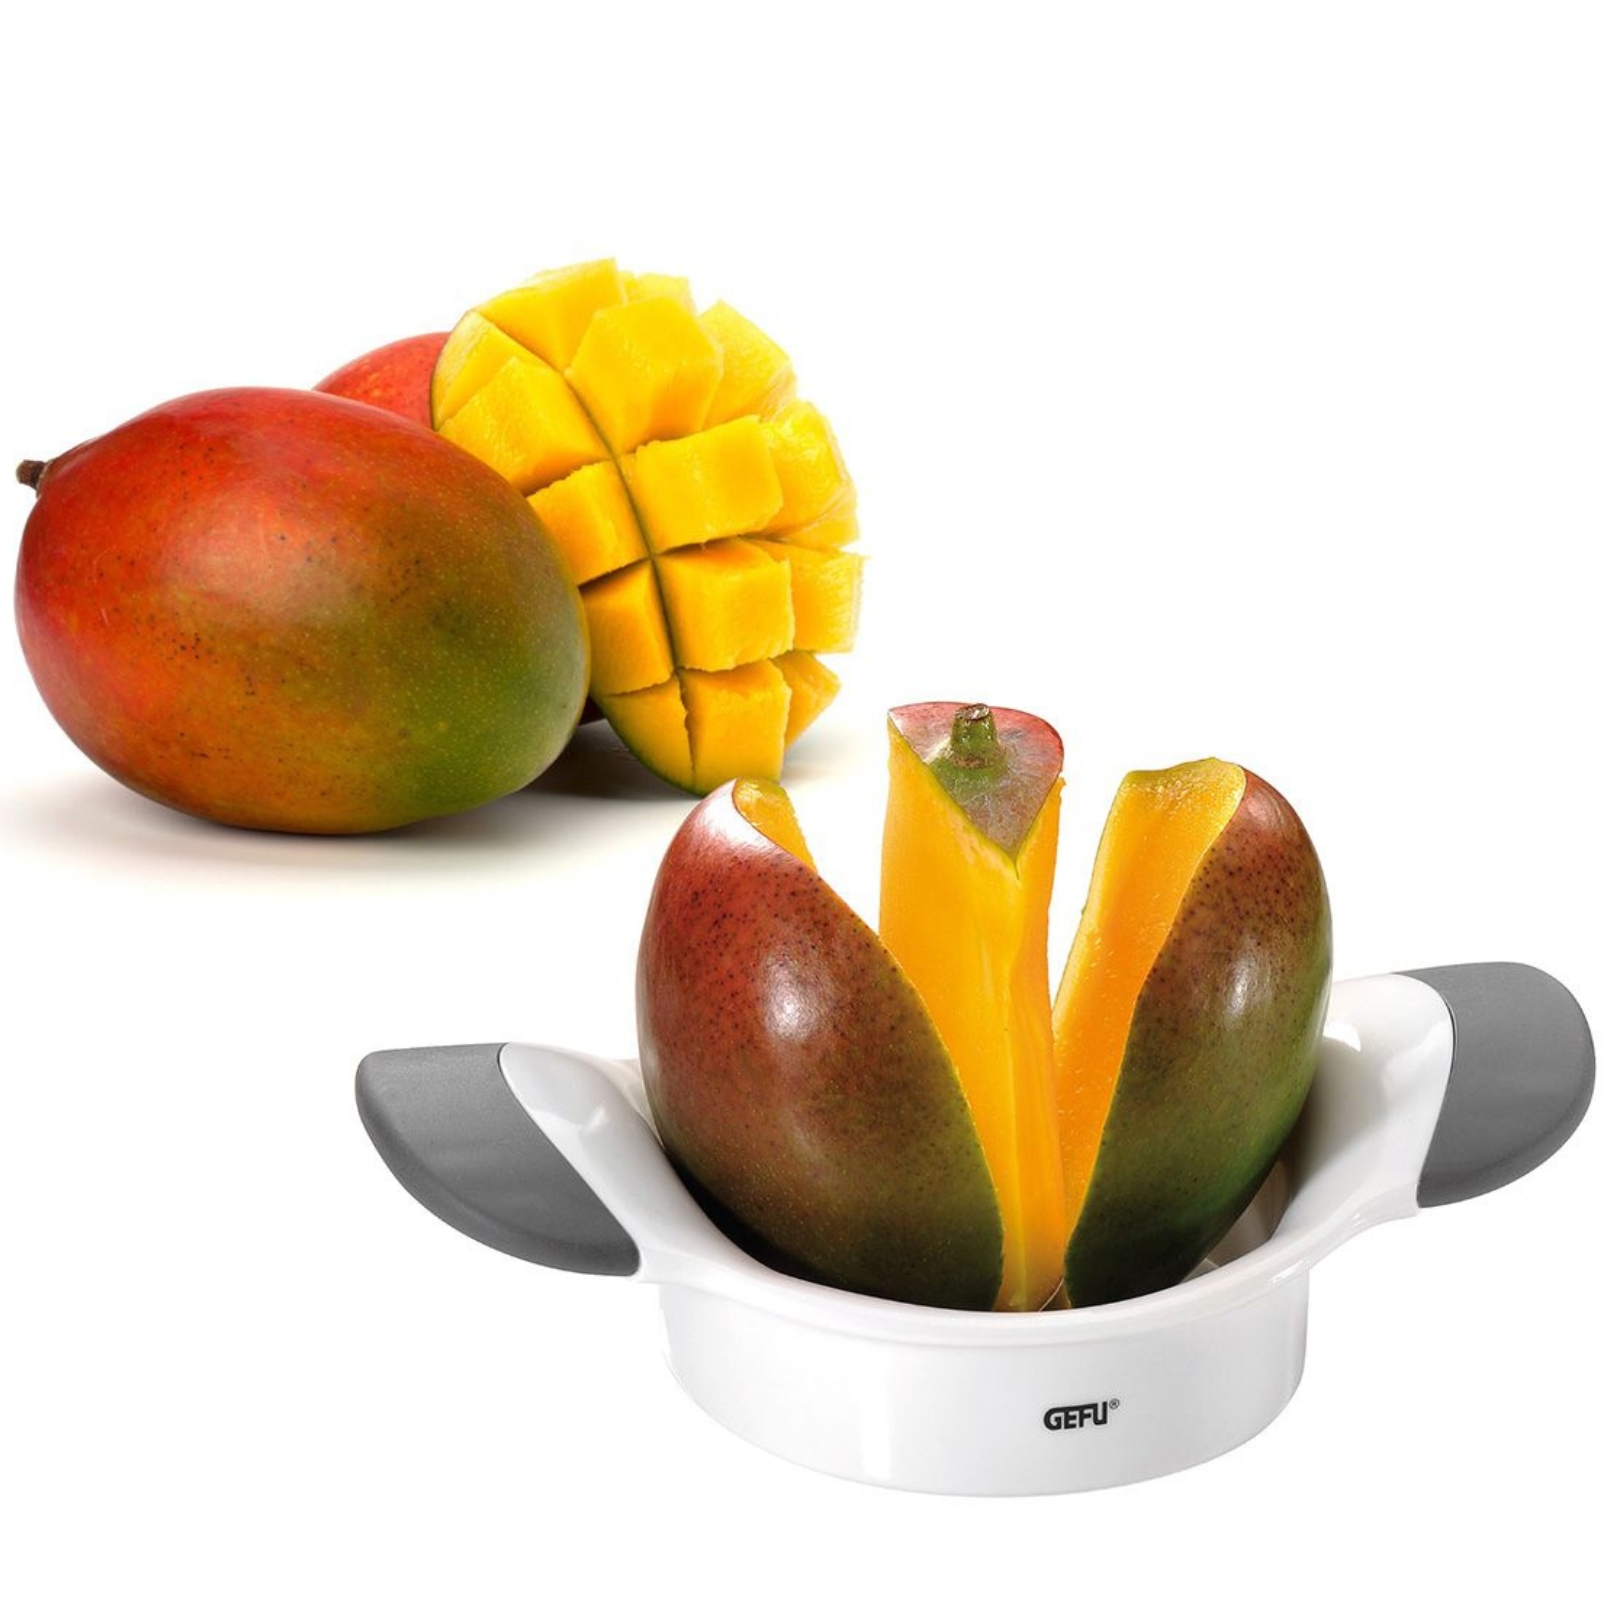 Buy Mango Splitter - Gefu Online NZ - Twisted Citrus